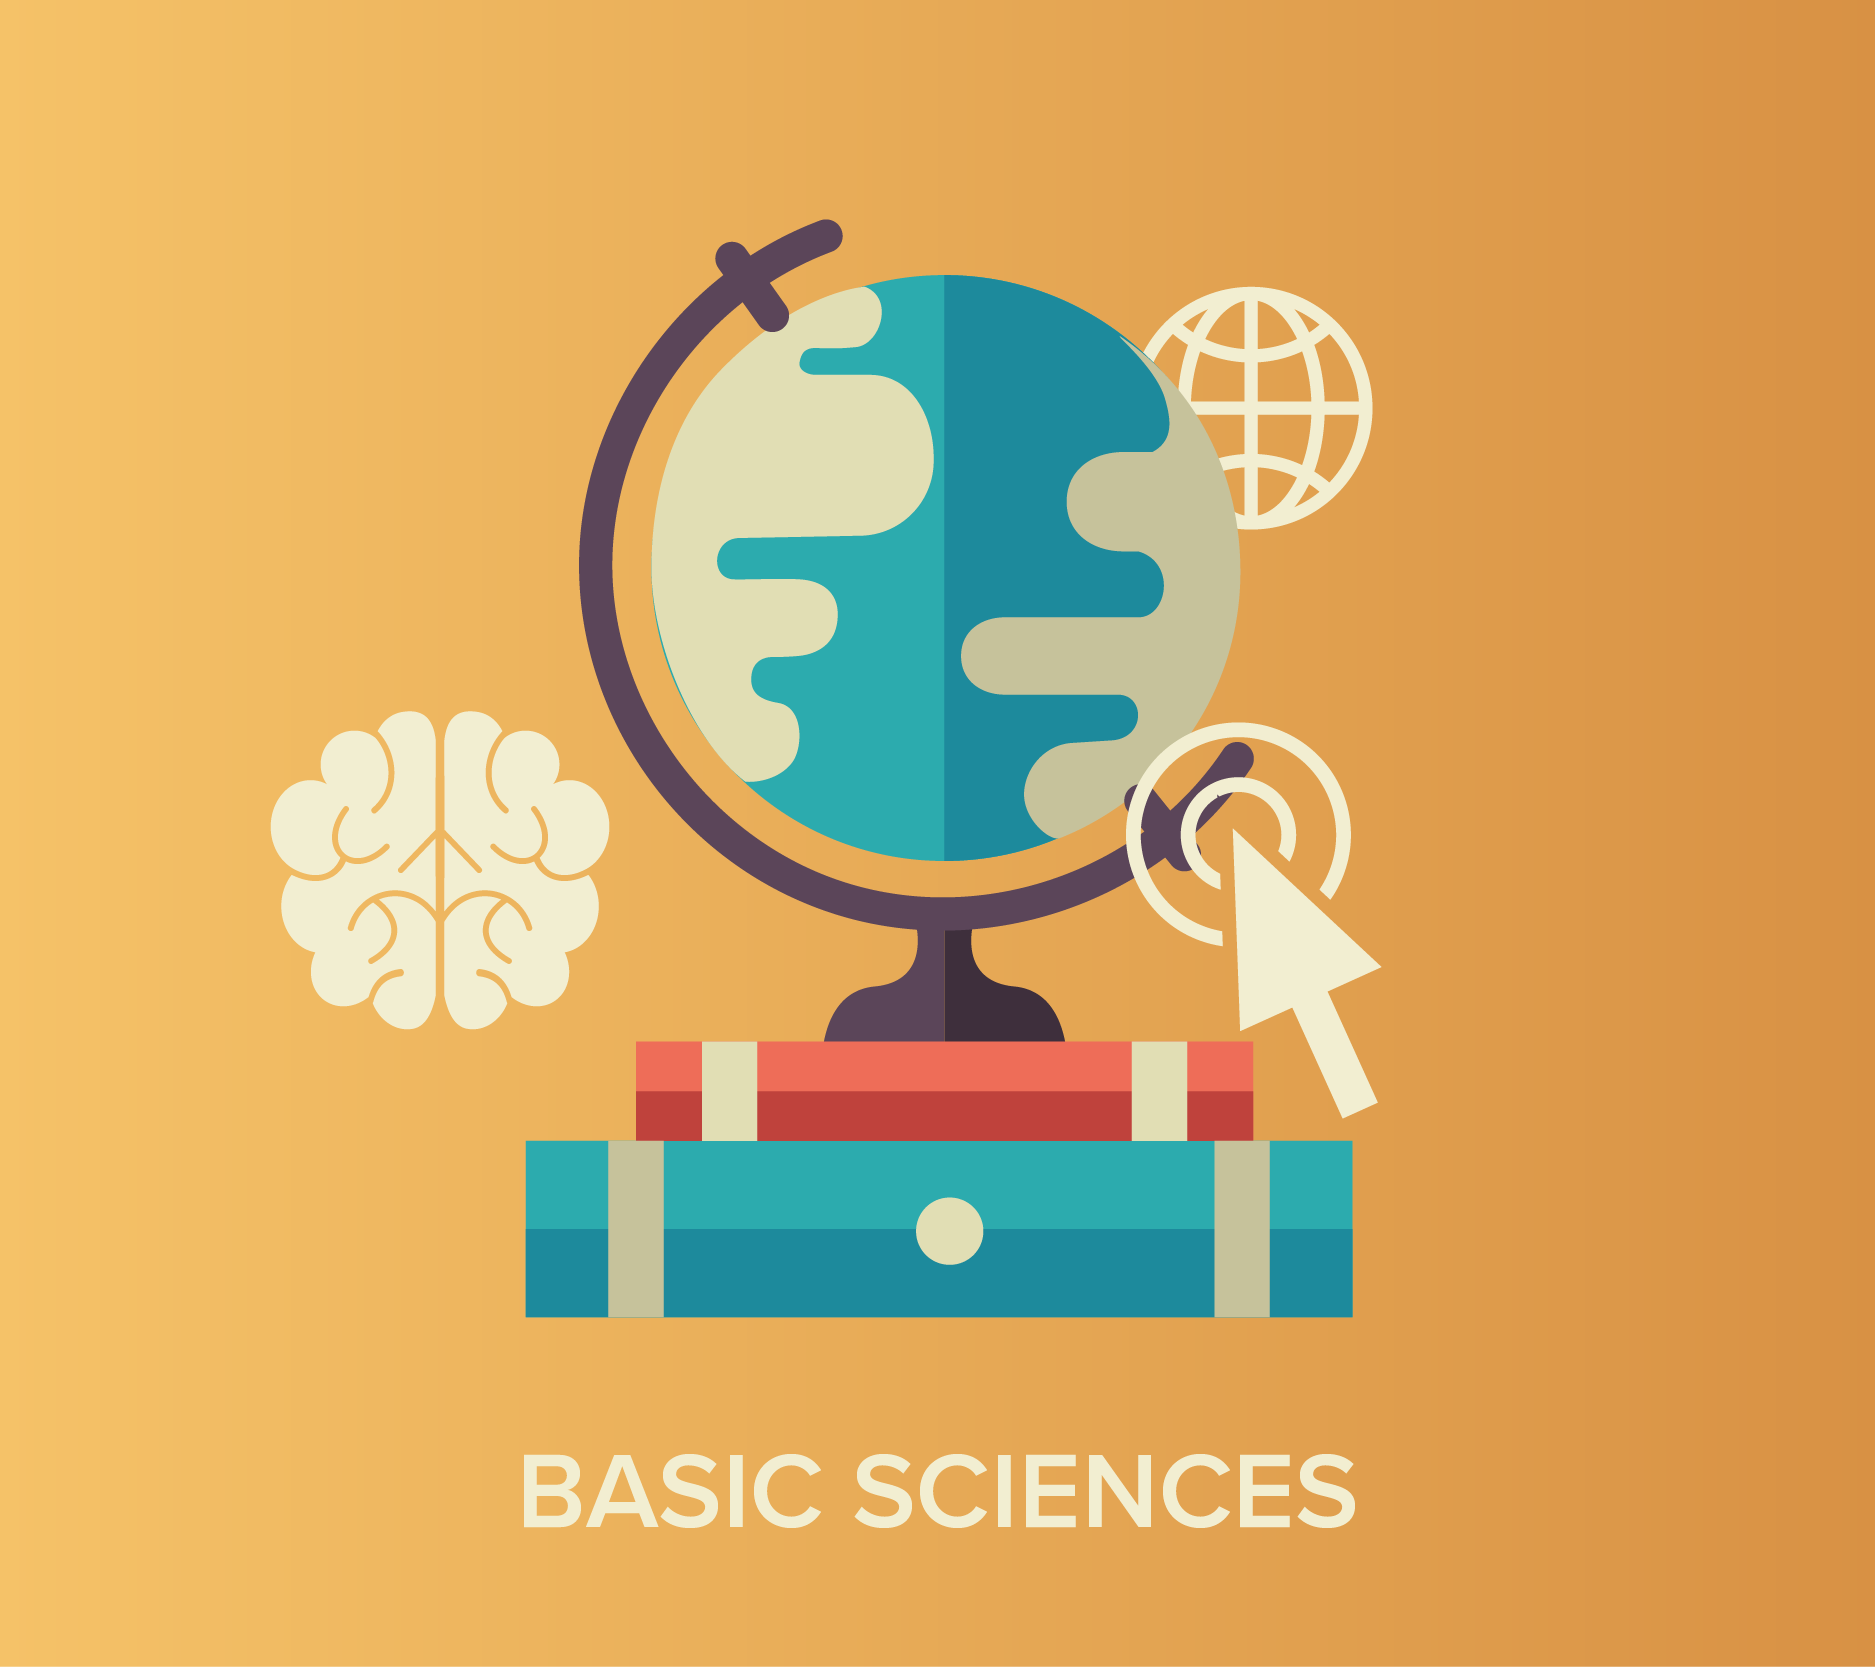 Basis Sciences